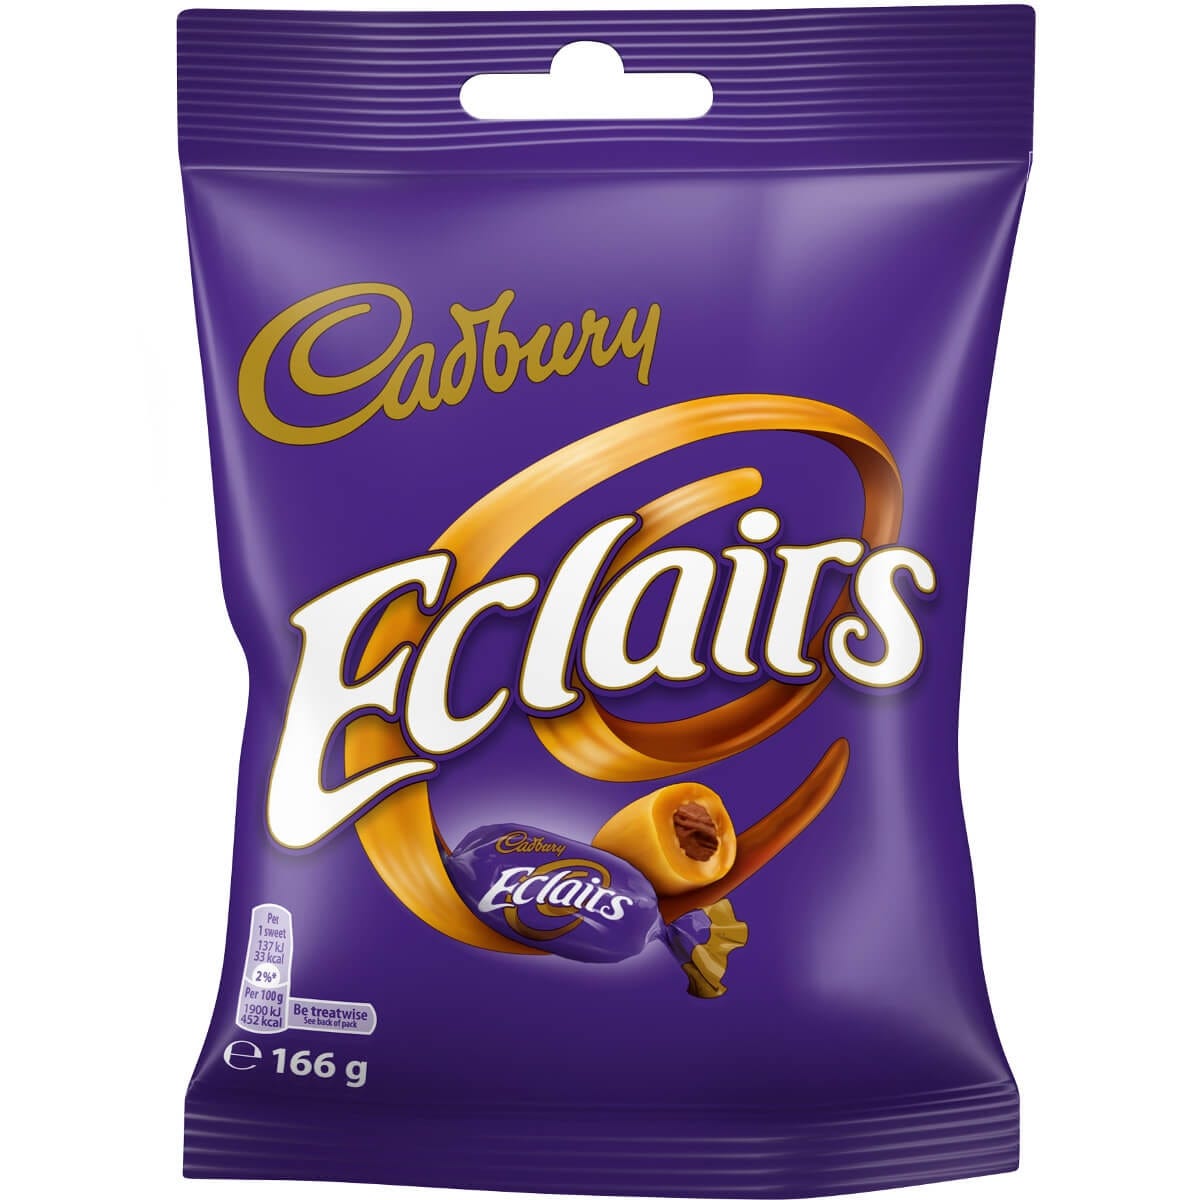 Picture of Cadbury Chocolate Eclairs 166g Bag